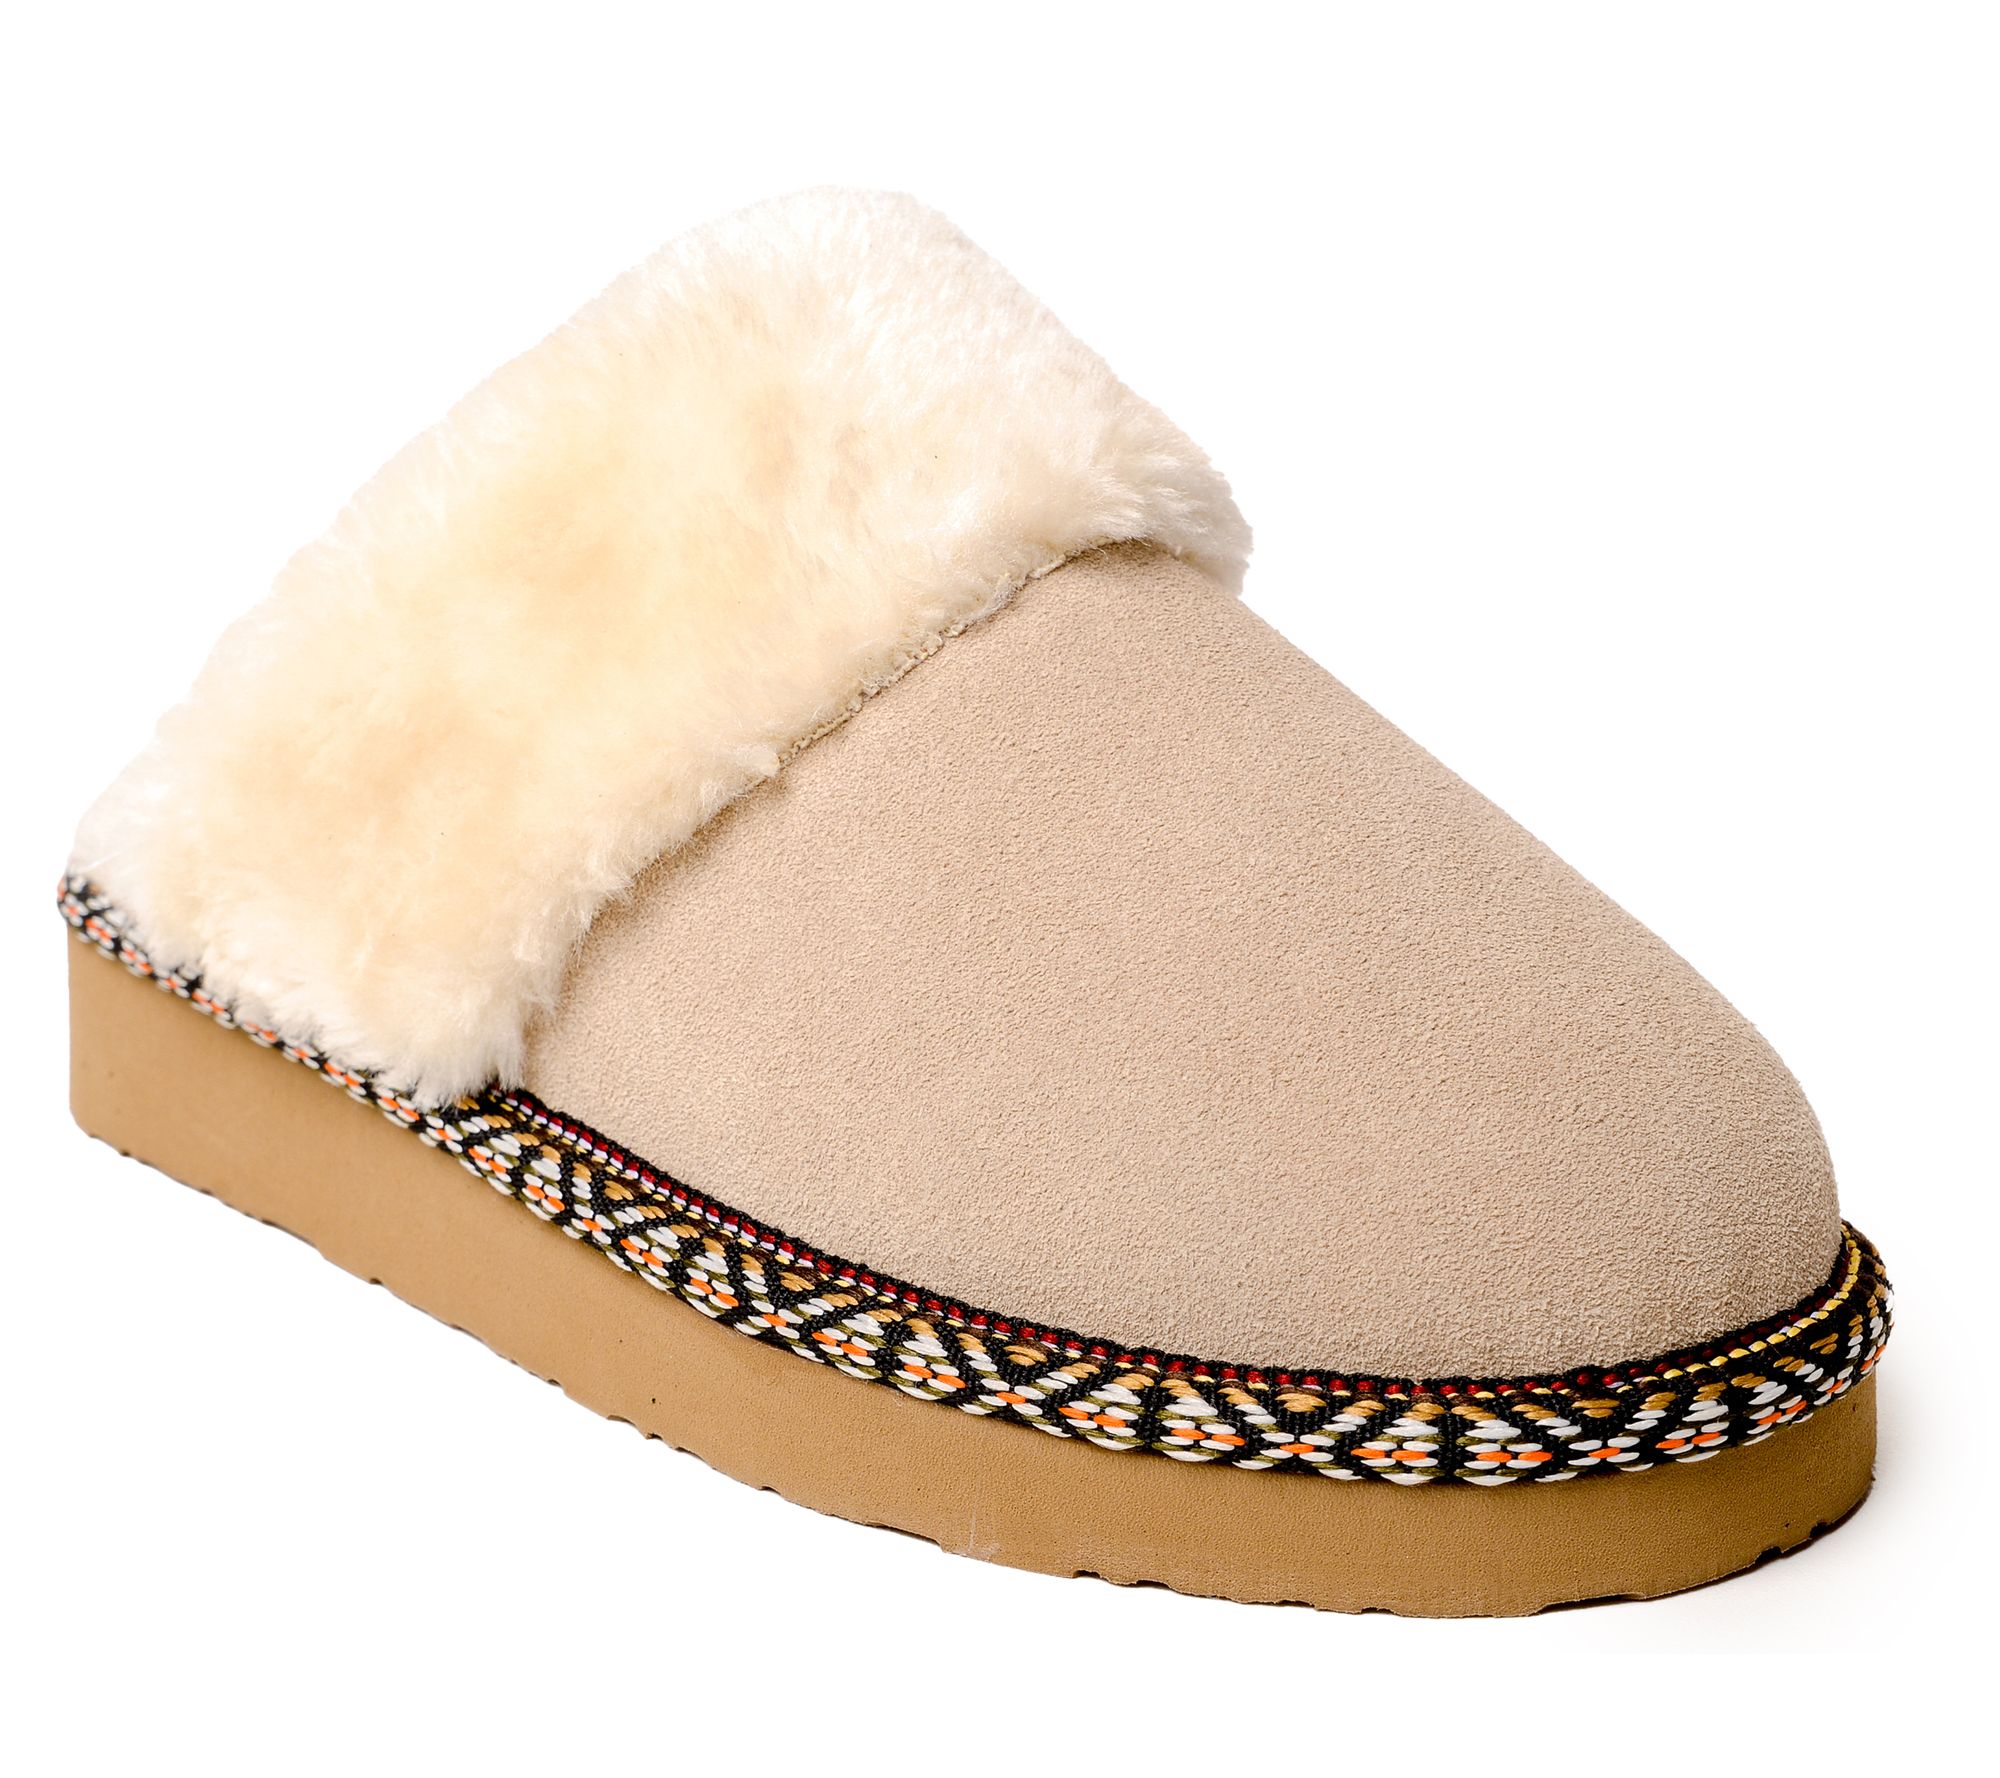 ladies chestnut brown lug sole faux fur scuff slippers